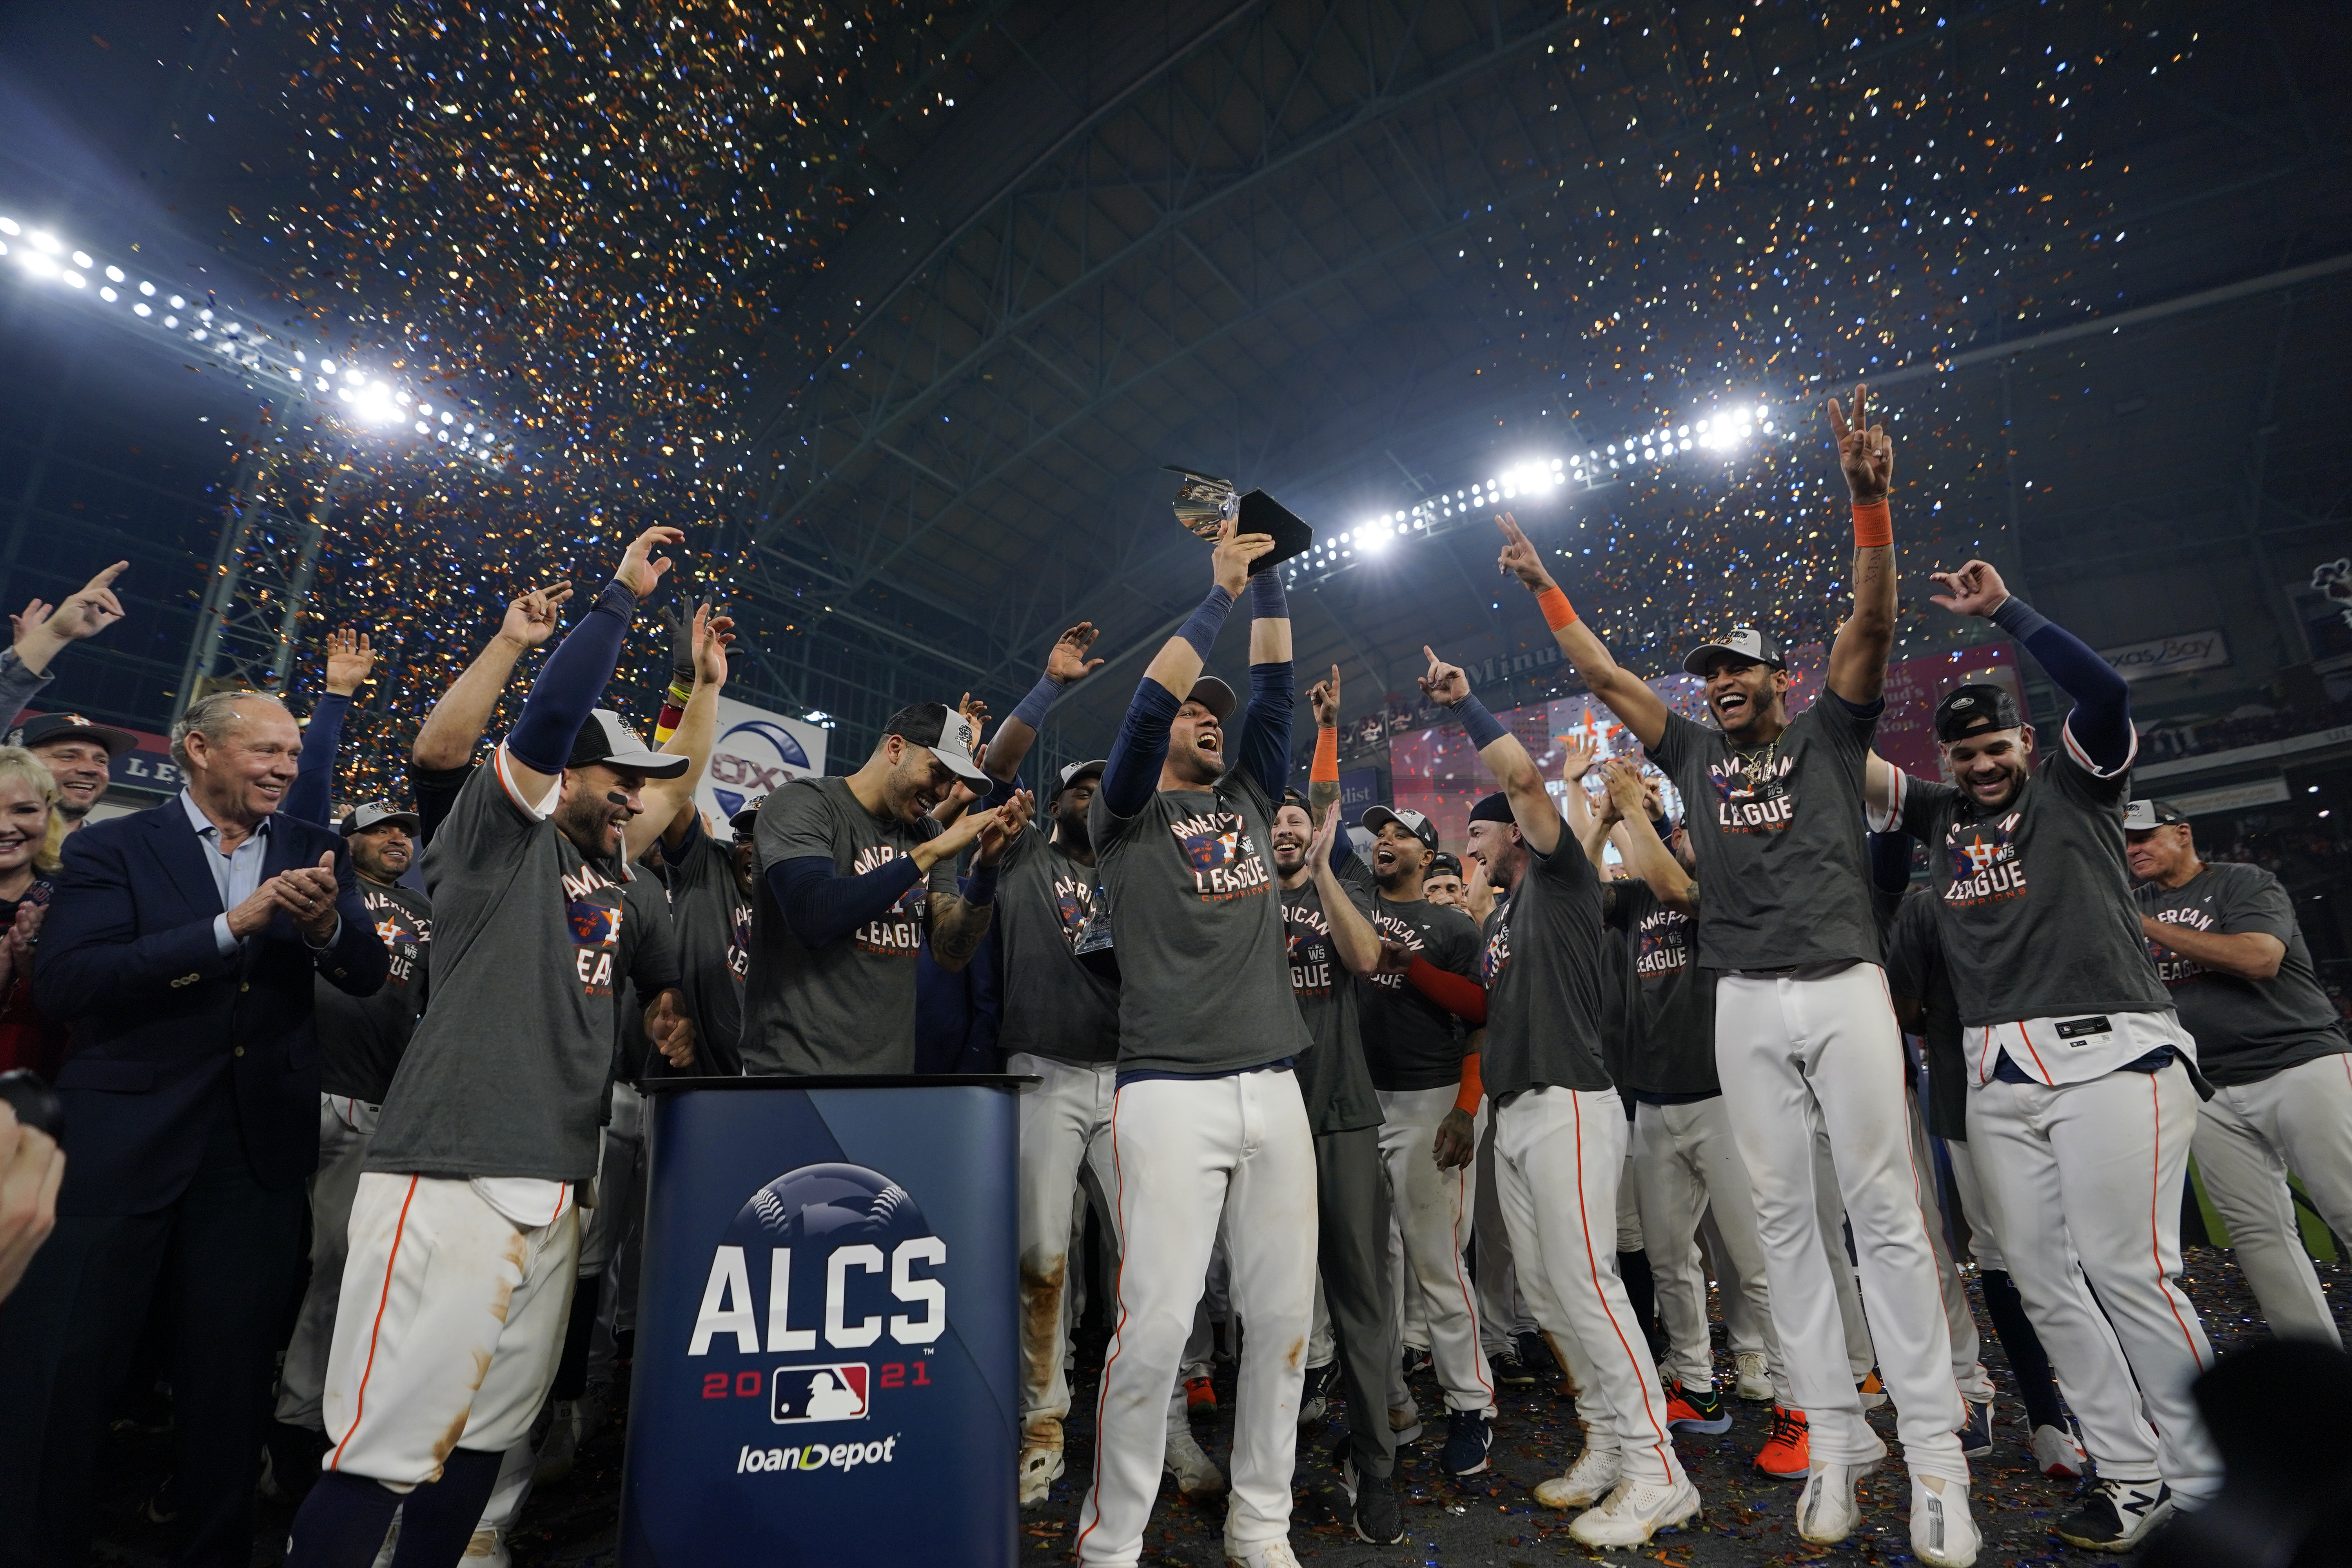 García, Alvarez help Astros oust Red Sox, reach World Series - NBC